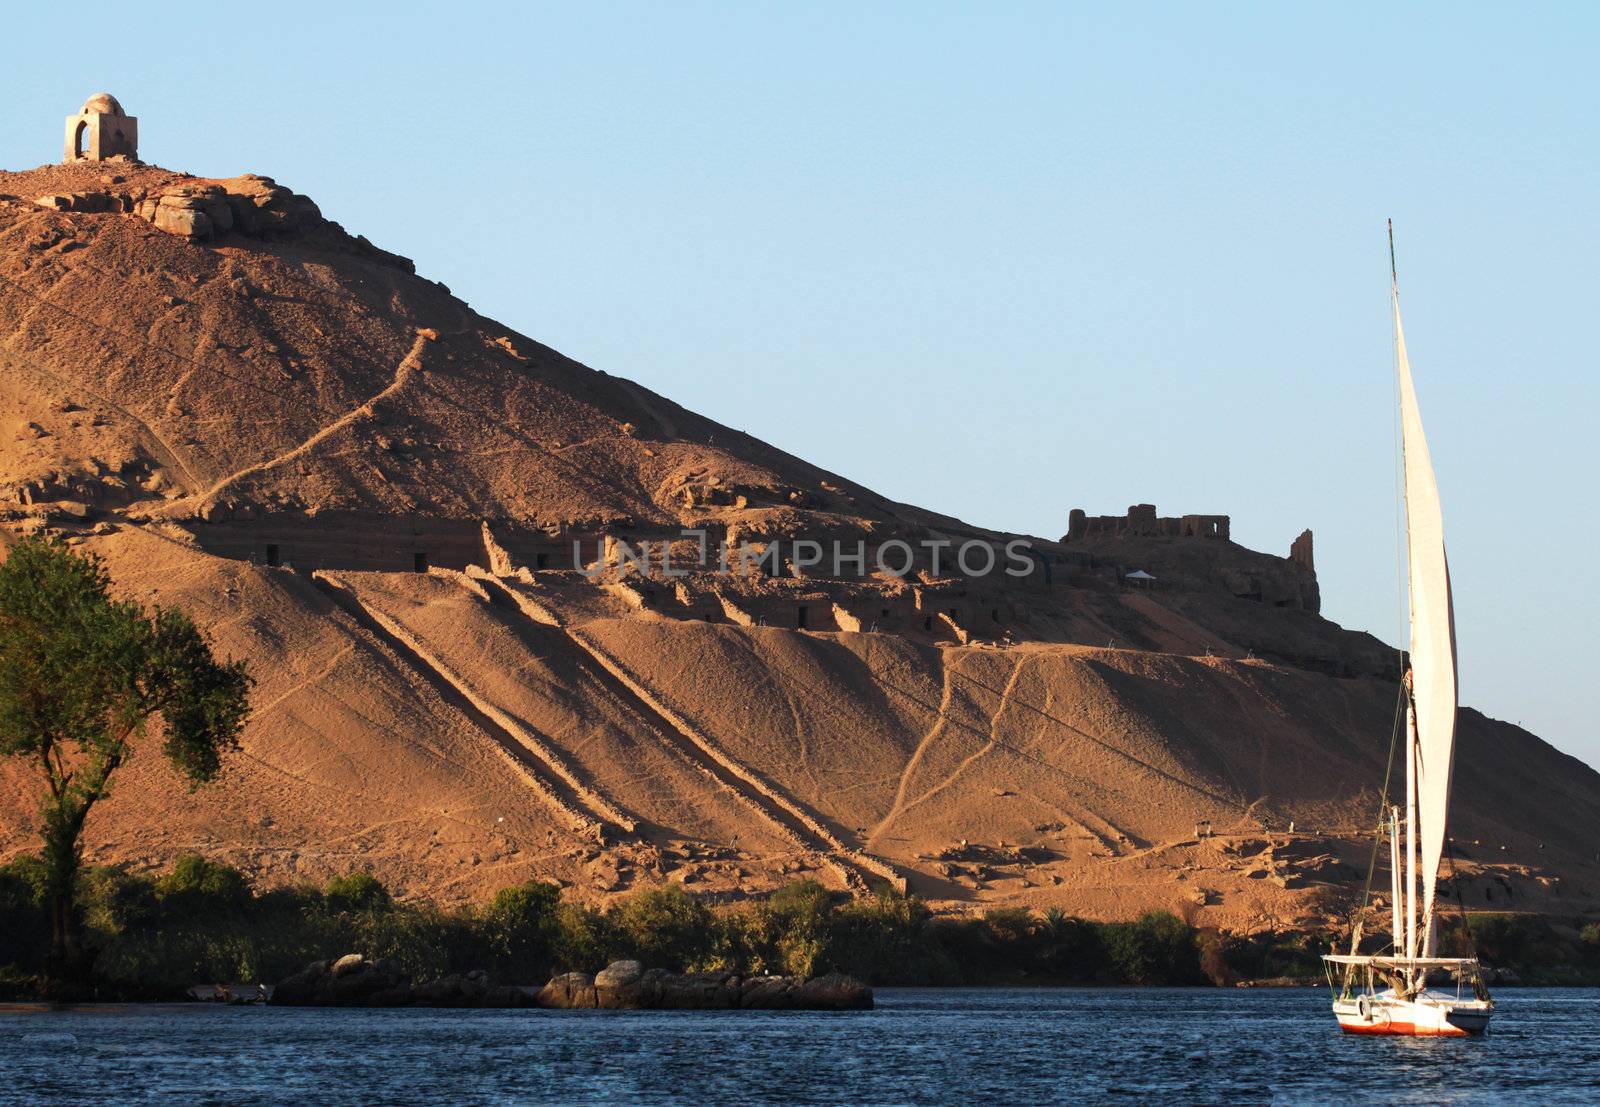 Sailboat on the Nile by Gbuglok